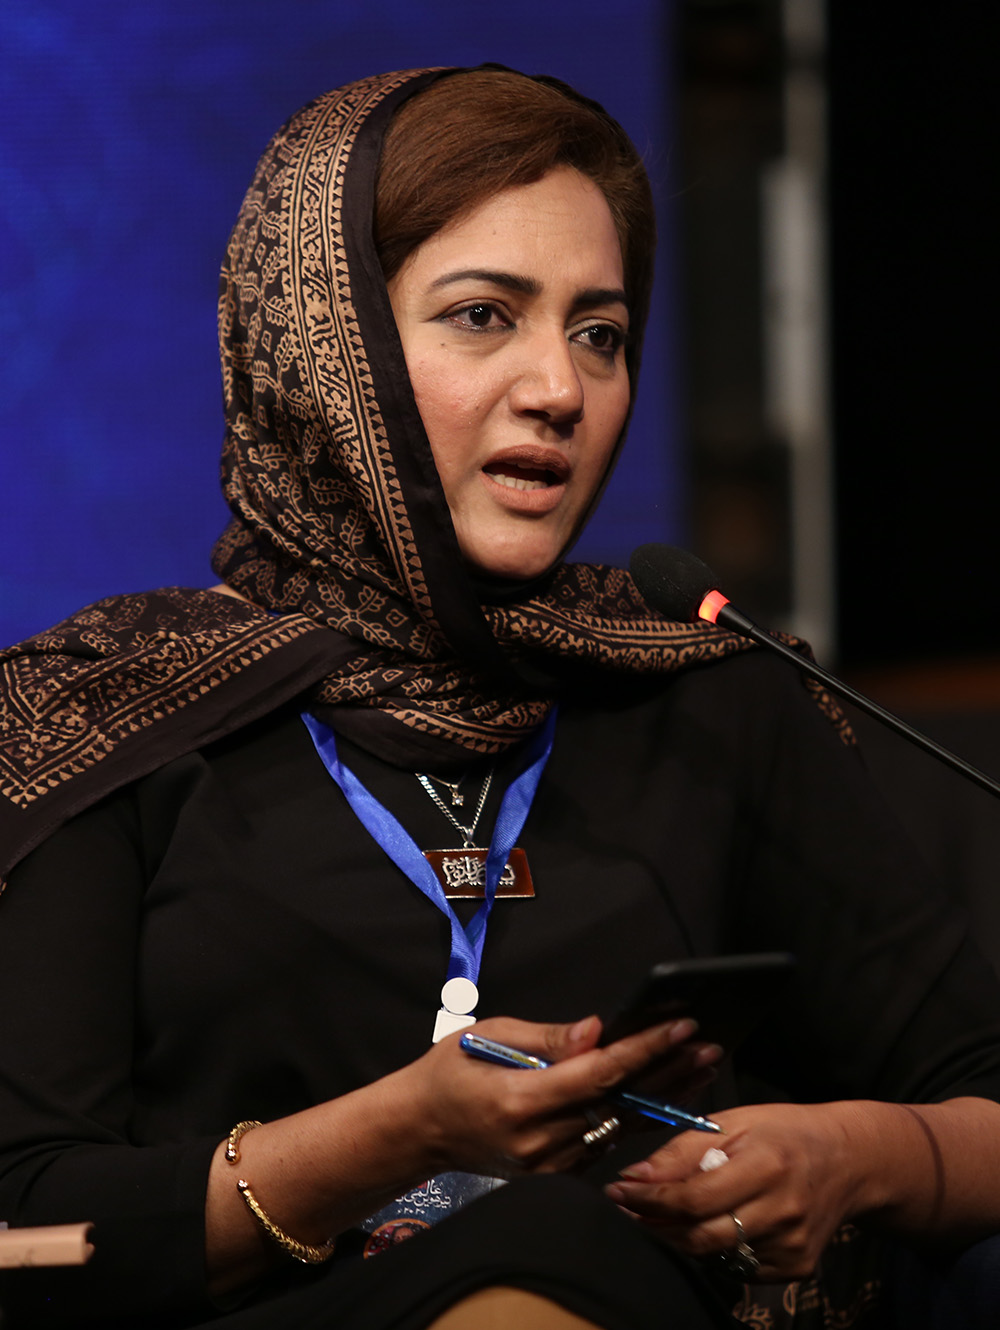 Asma Shirazi